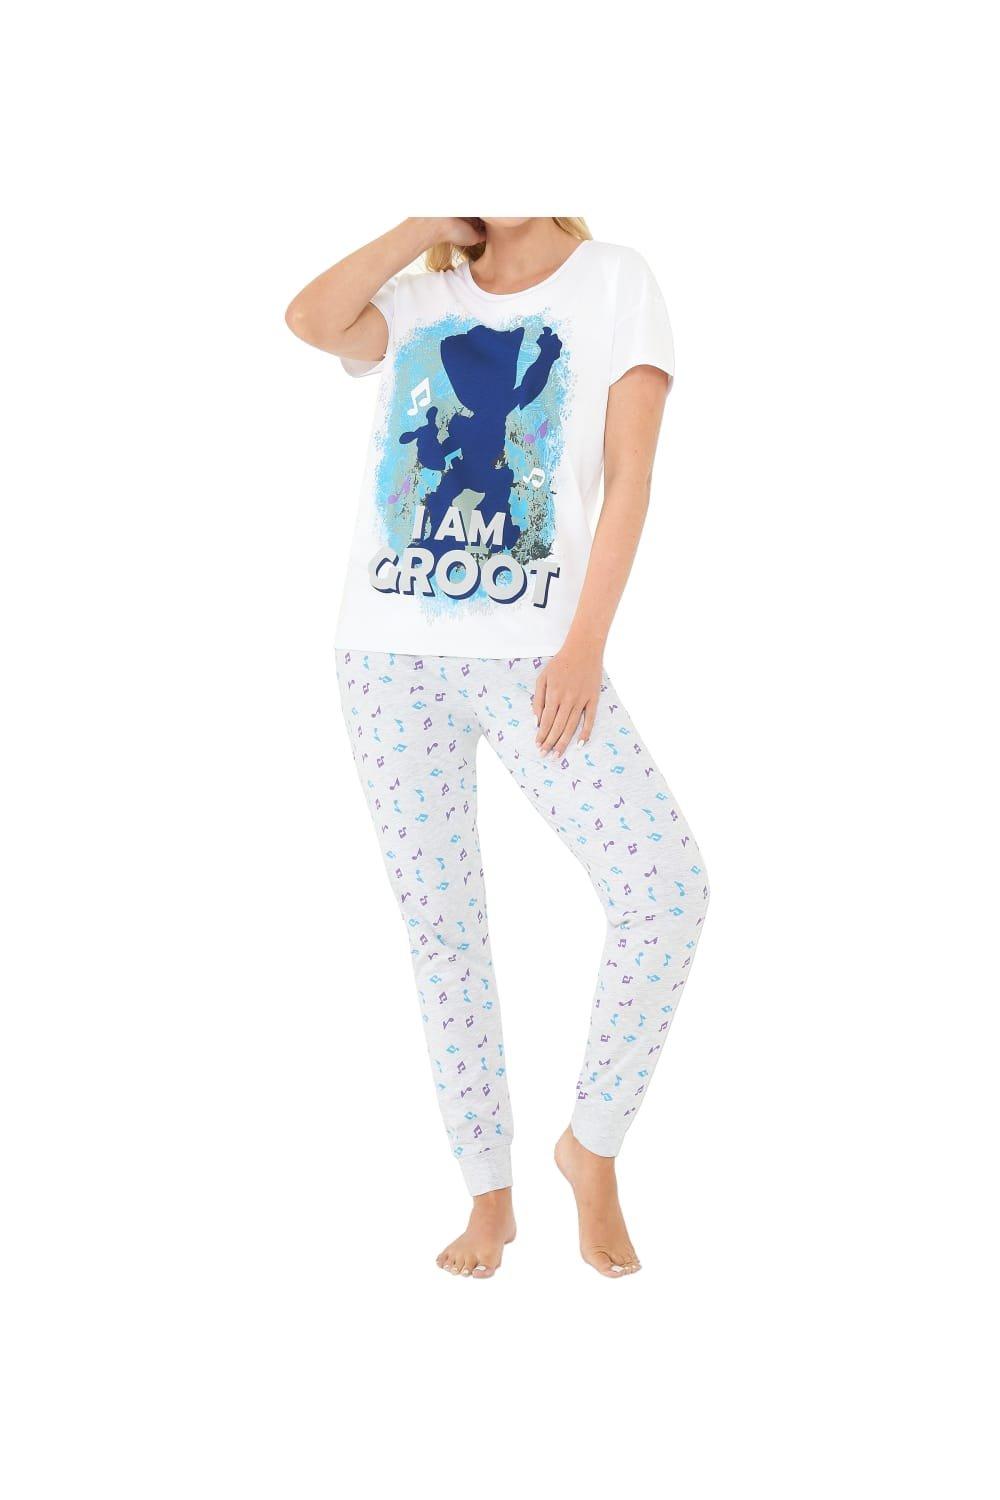 I am Groot Guardians of the Galaxy Womens Pyjamas